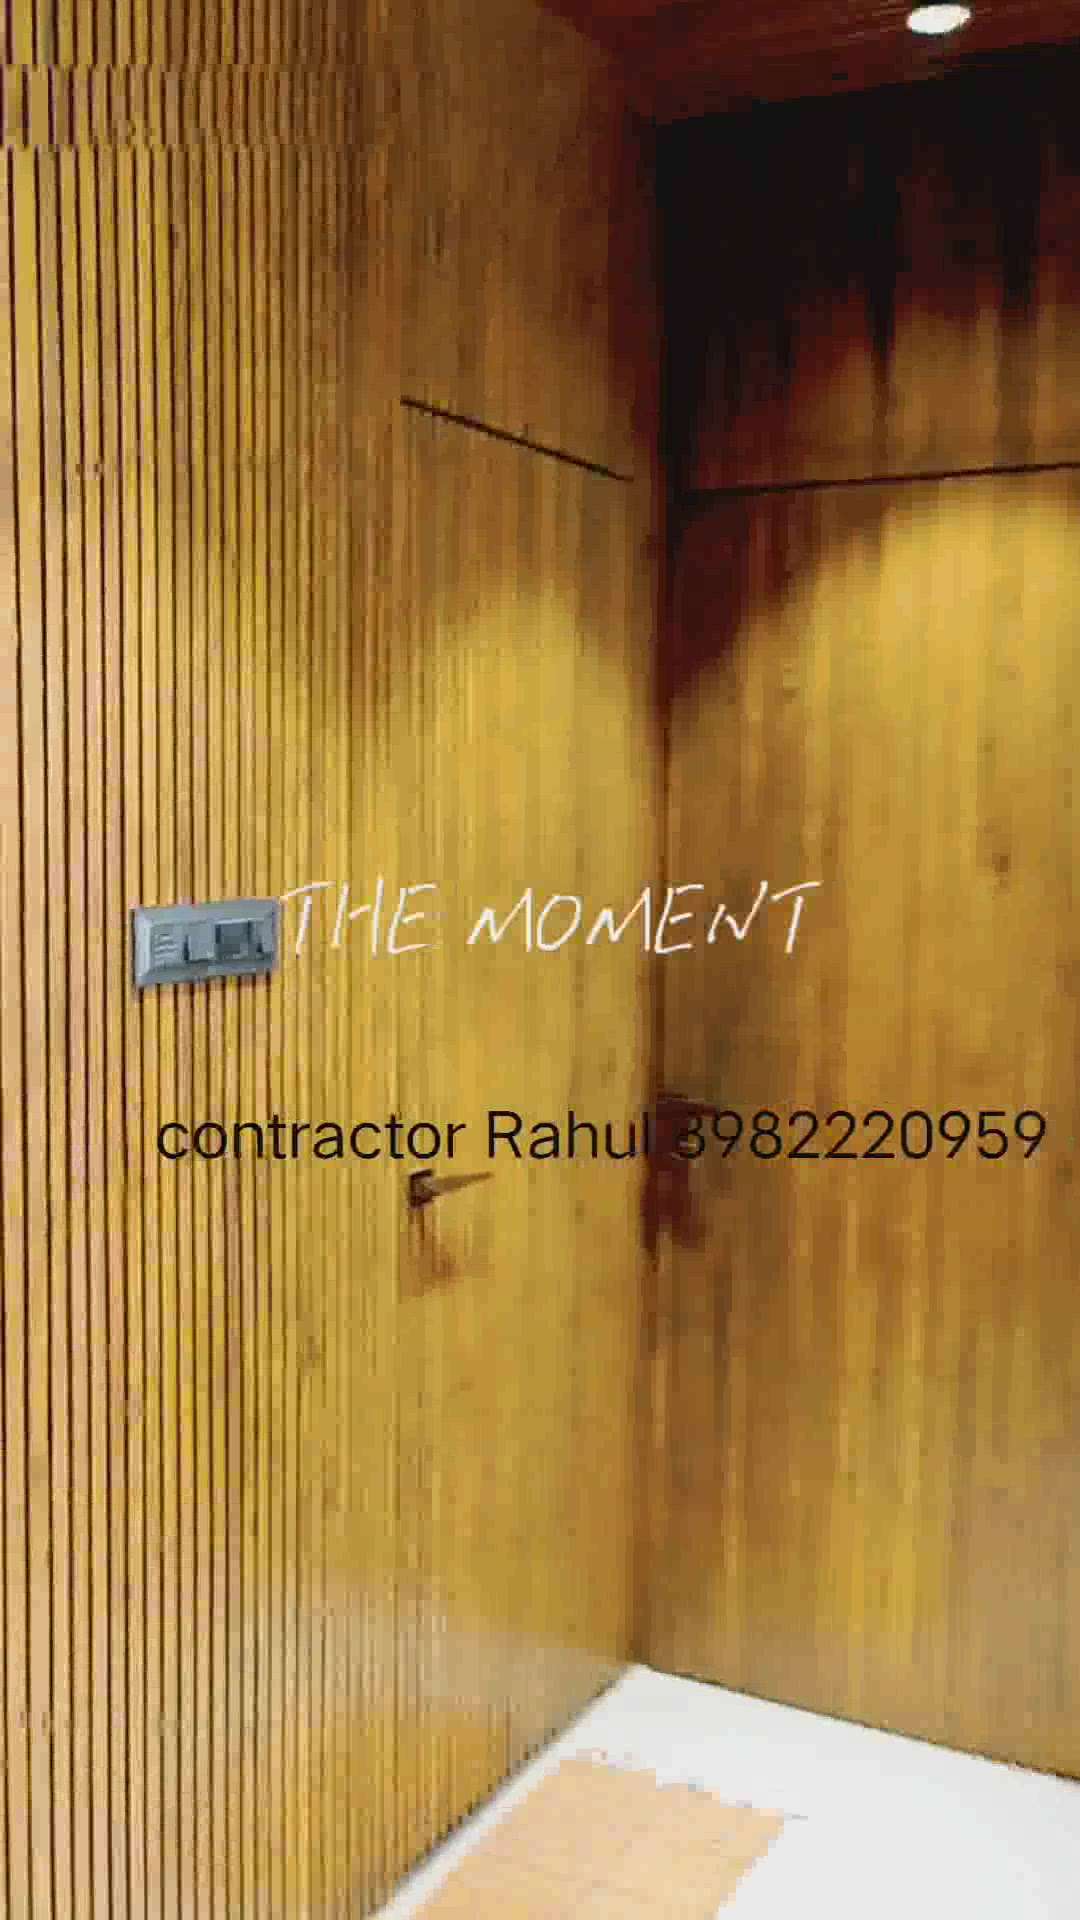 #Contractor Rahul 8982220959
 #rip  #Designs